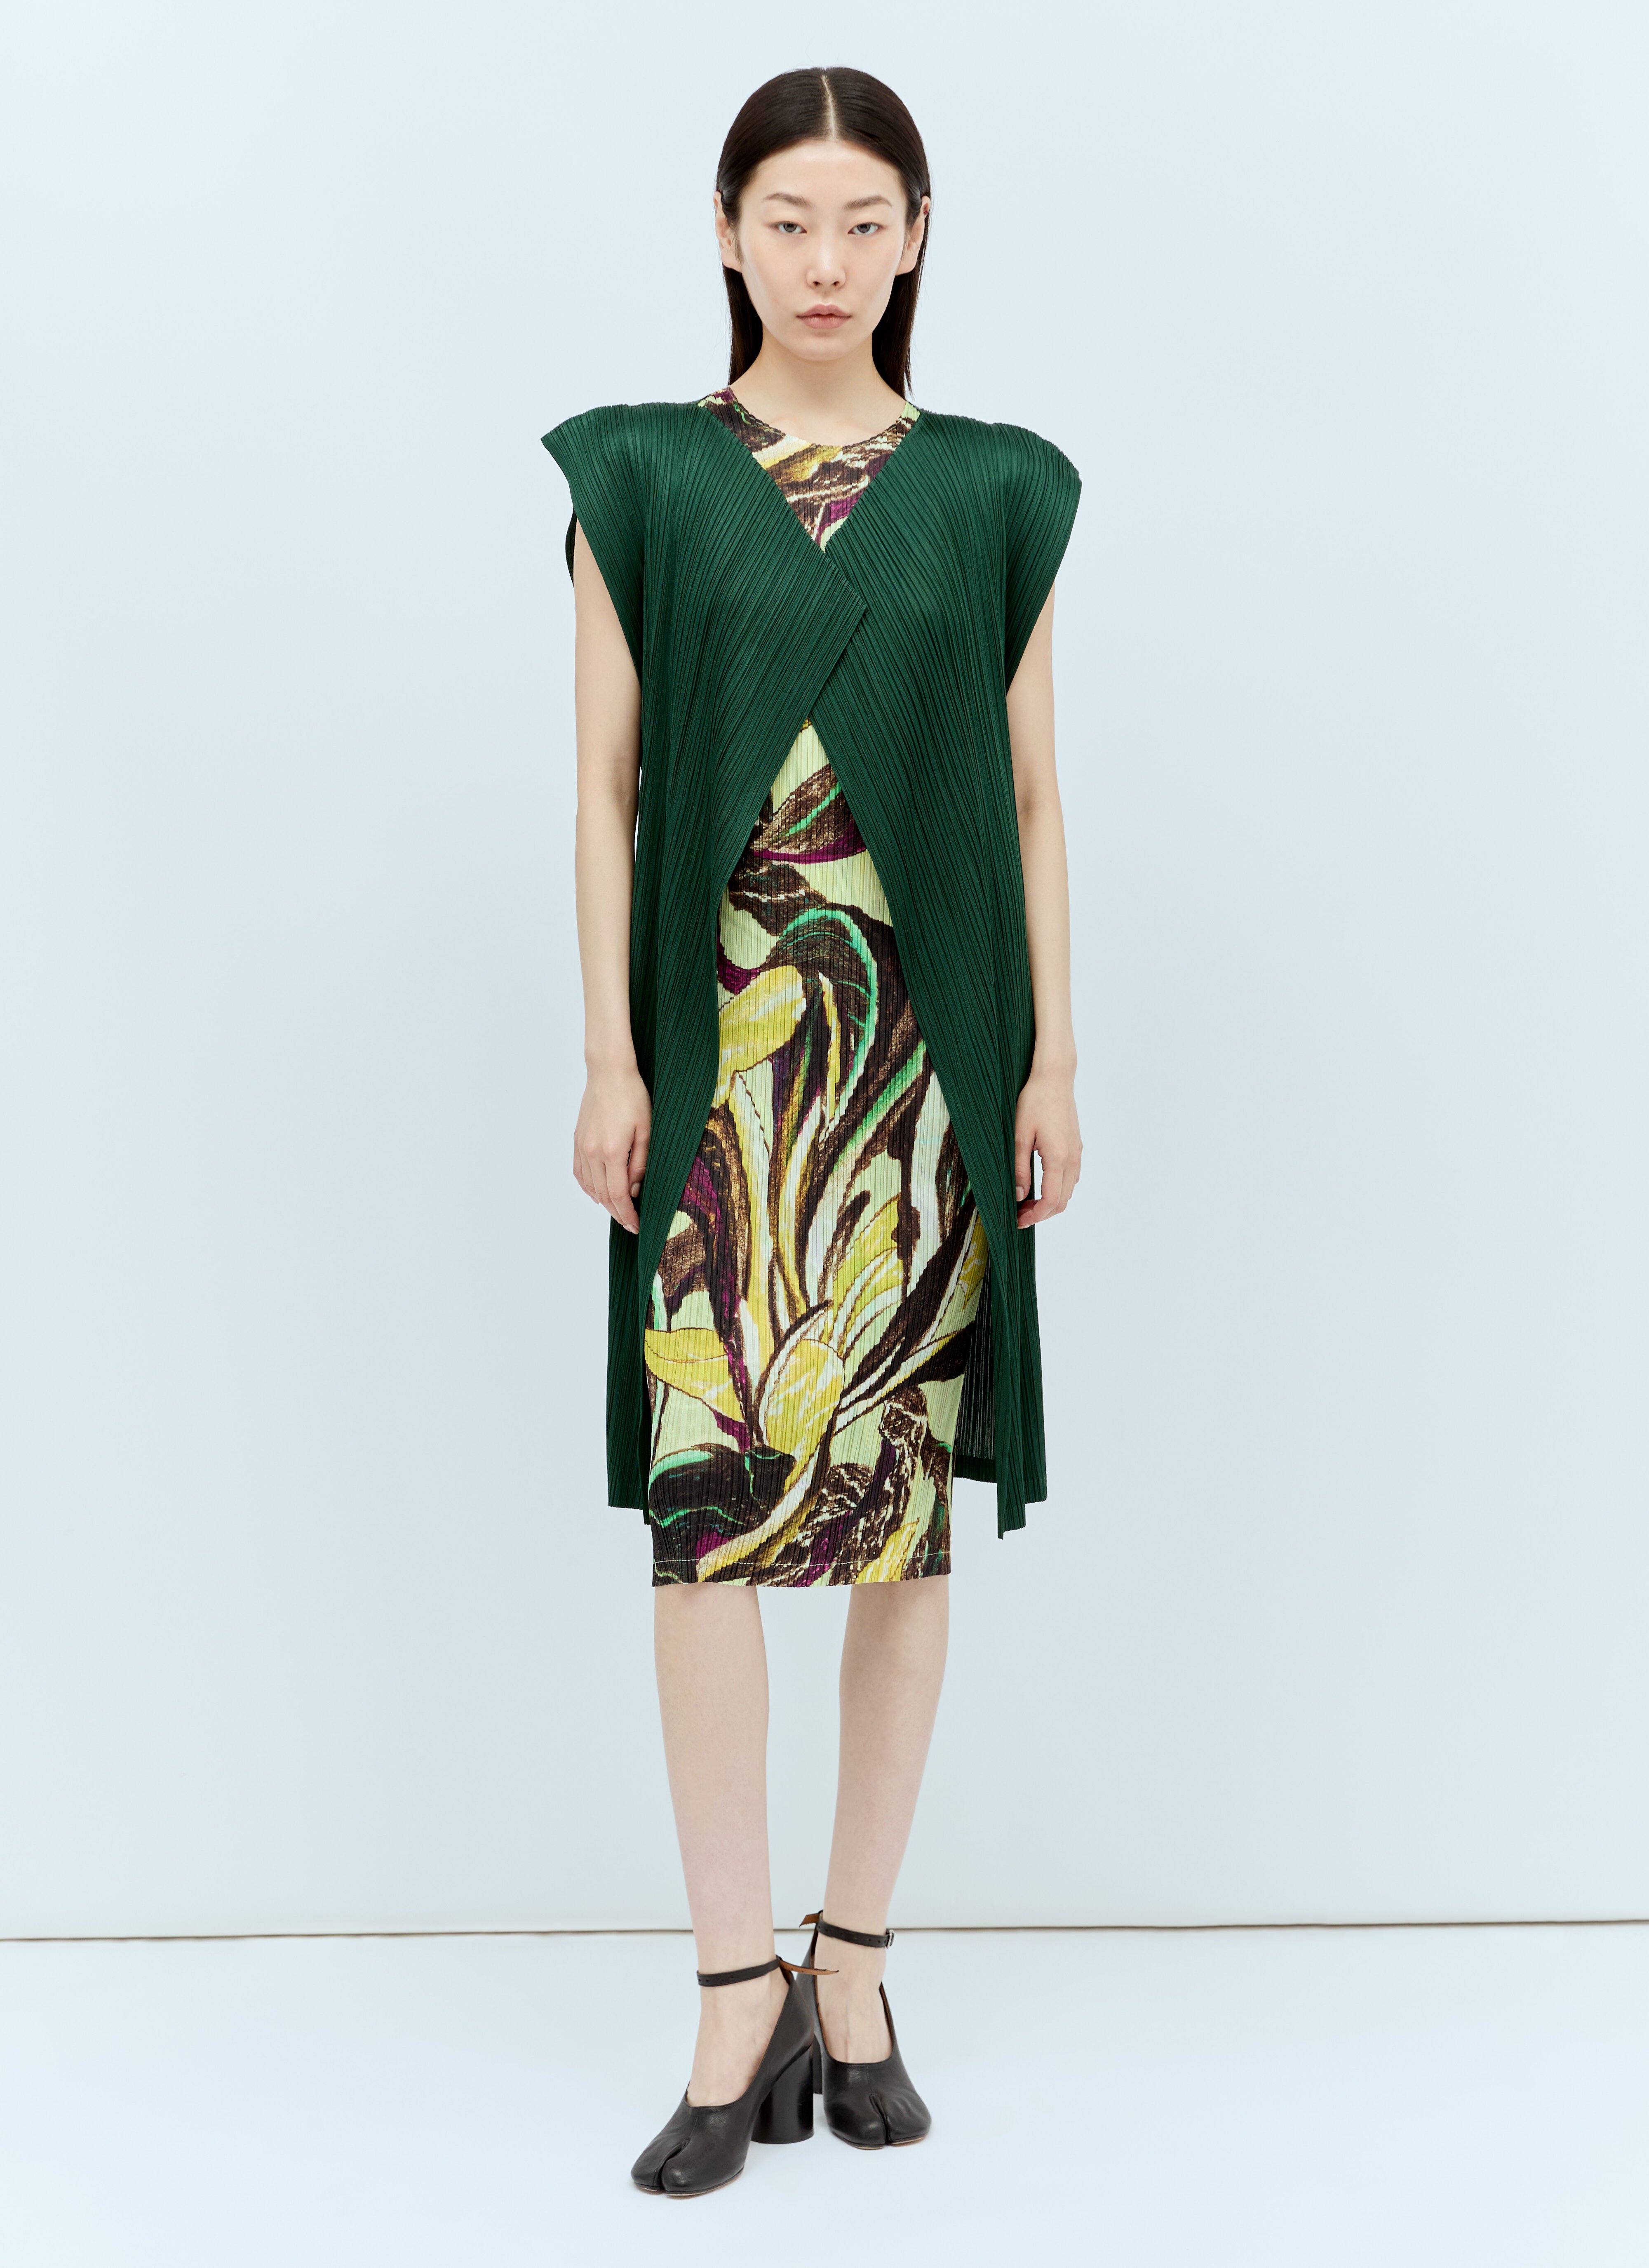 Jean Paul Gaultier Monthly Colors: March Vest Green jpg0256007